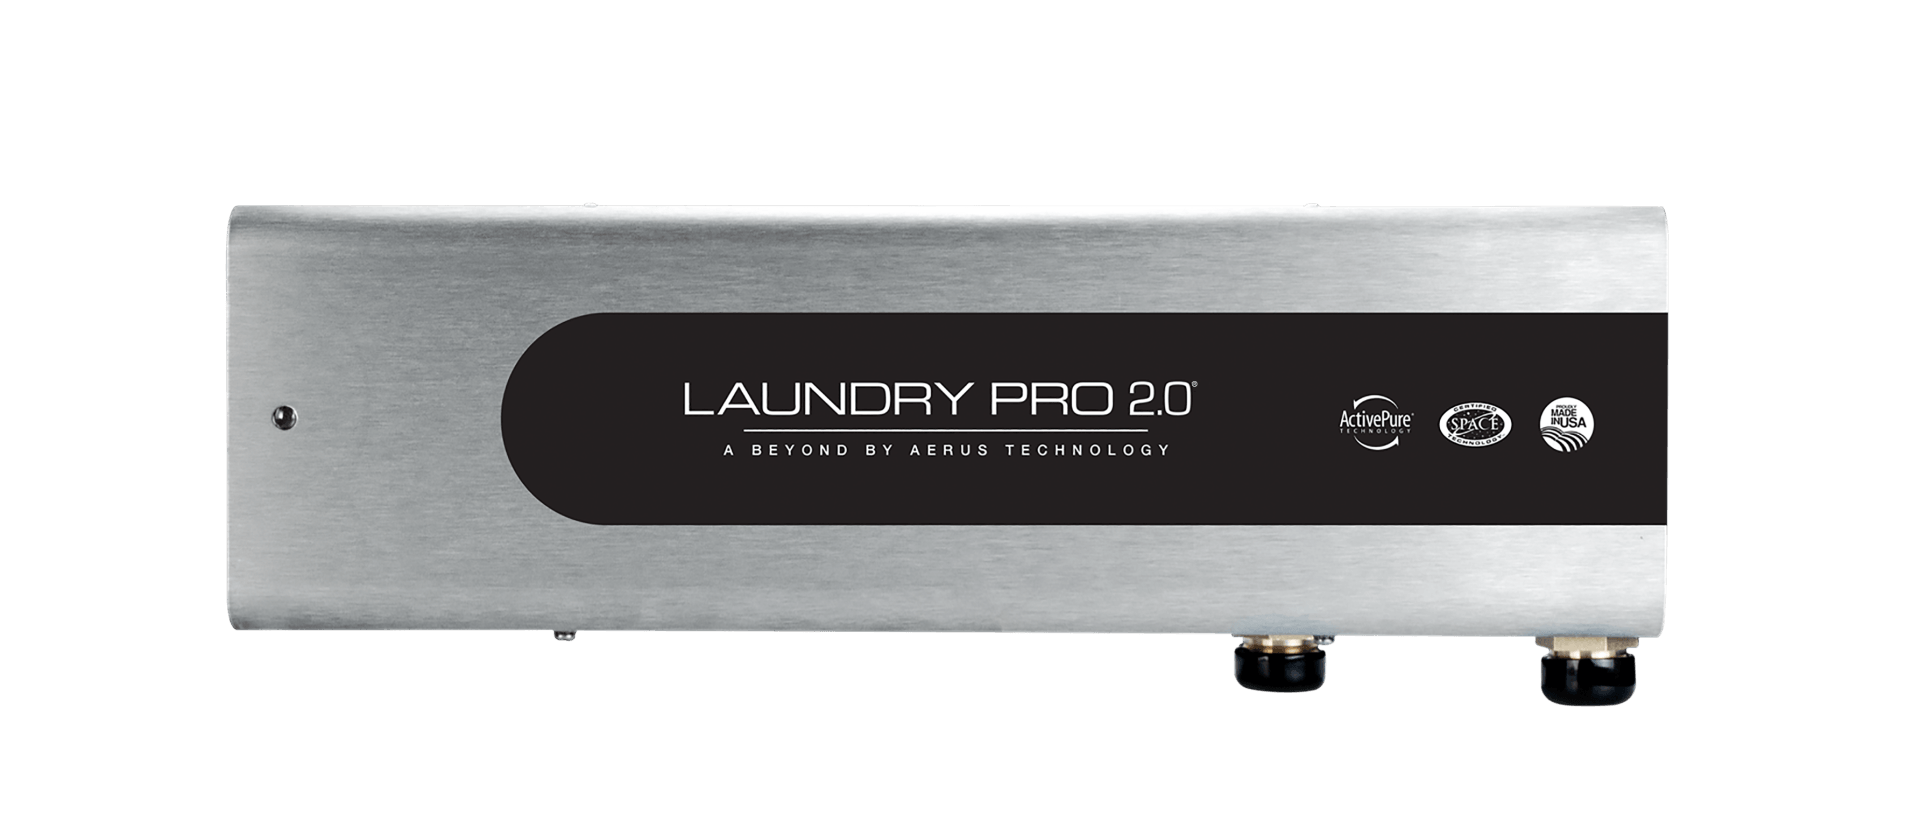 Laundry Pro 2.0